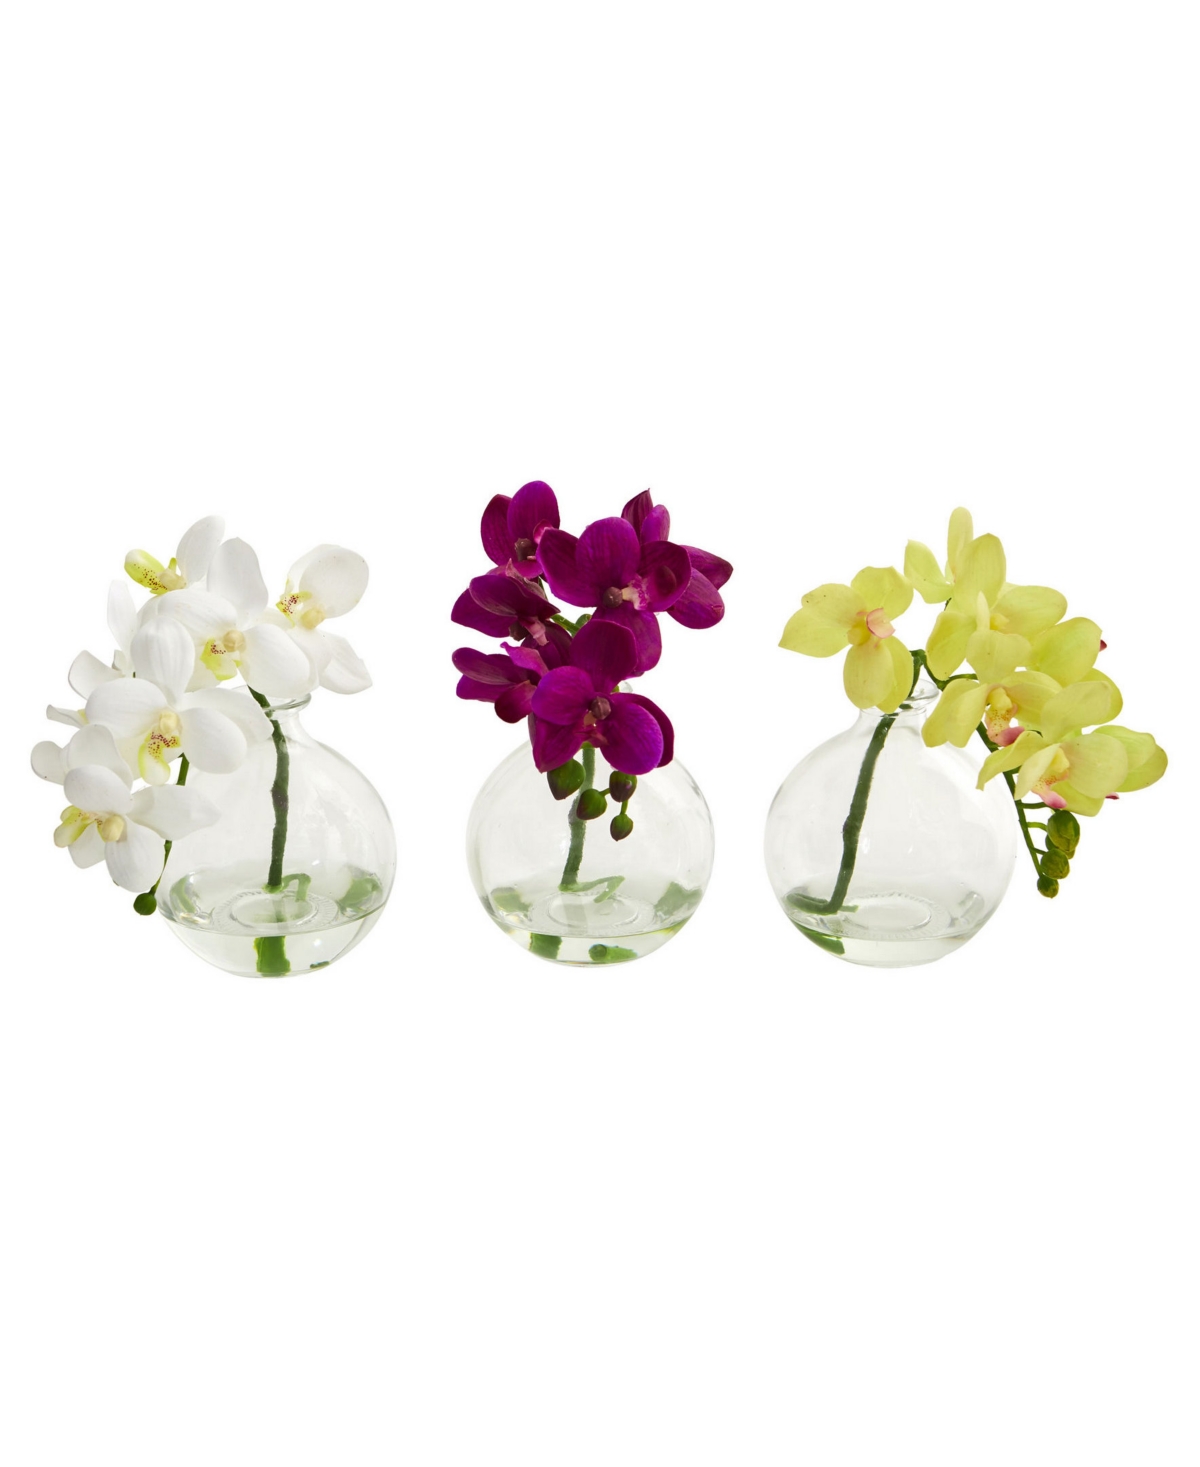 9'' Phalaenopsis Orchid Artificial Arrangement in Glass Vase, Set of 3 - Multi